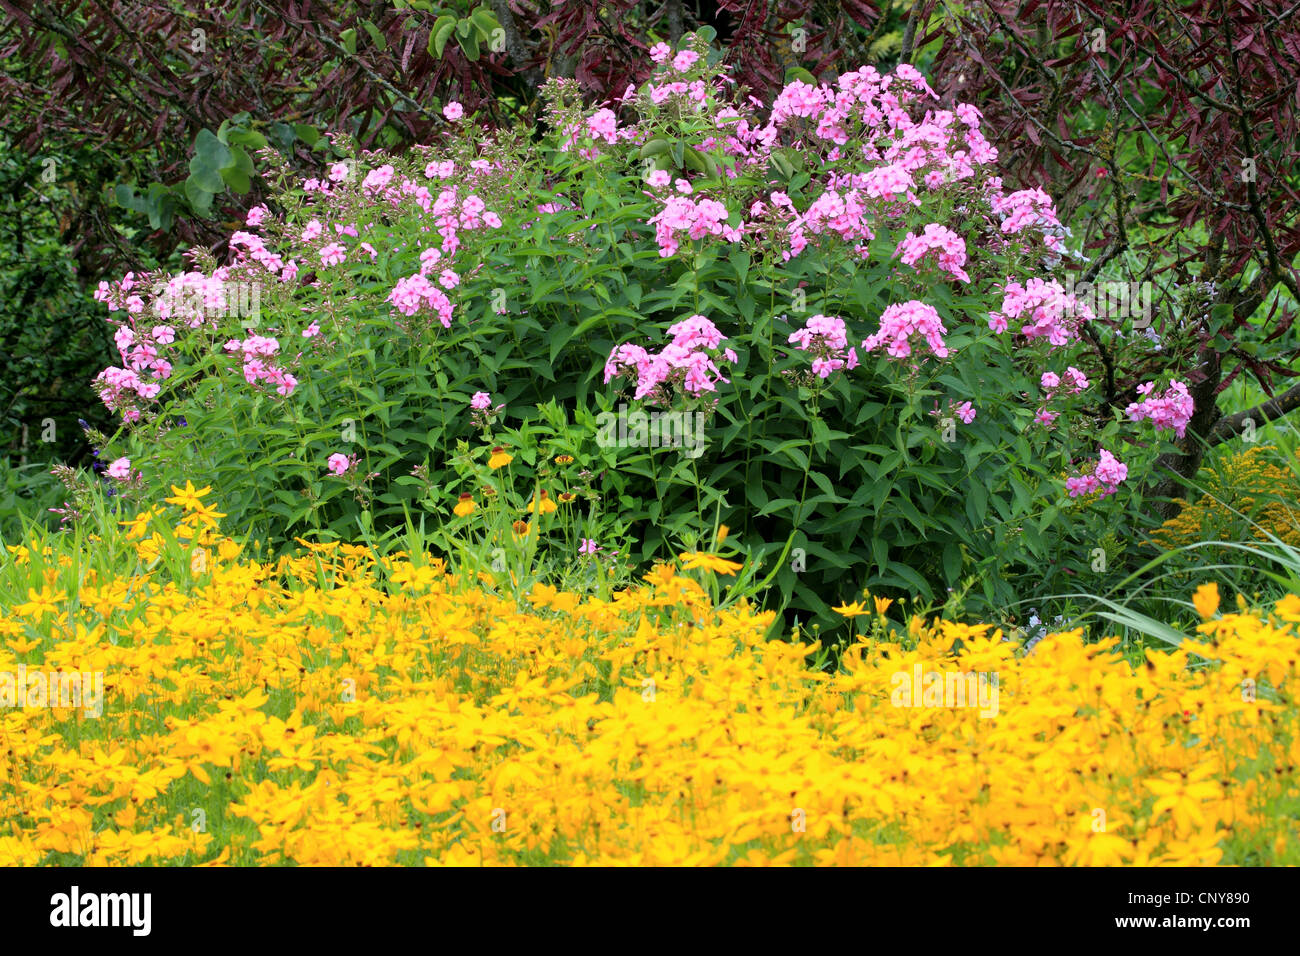 fall phlox, garden phlox (Phlox paniculata), blooming in a garden with Coreopsis Stock Photo